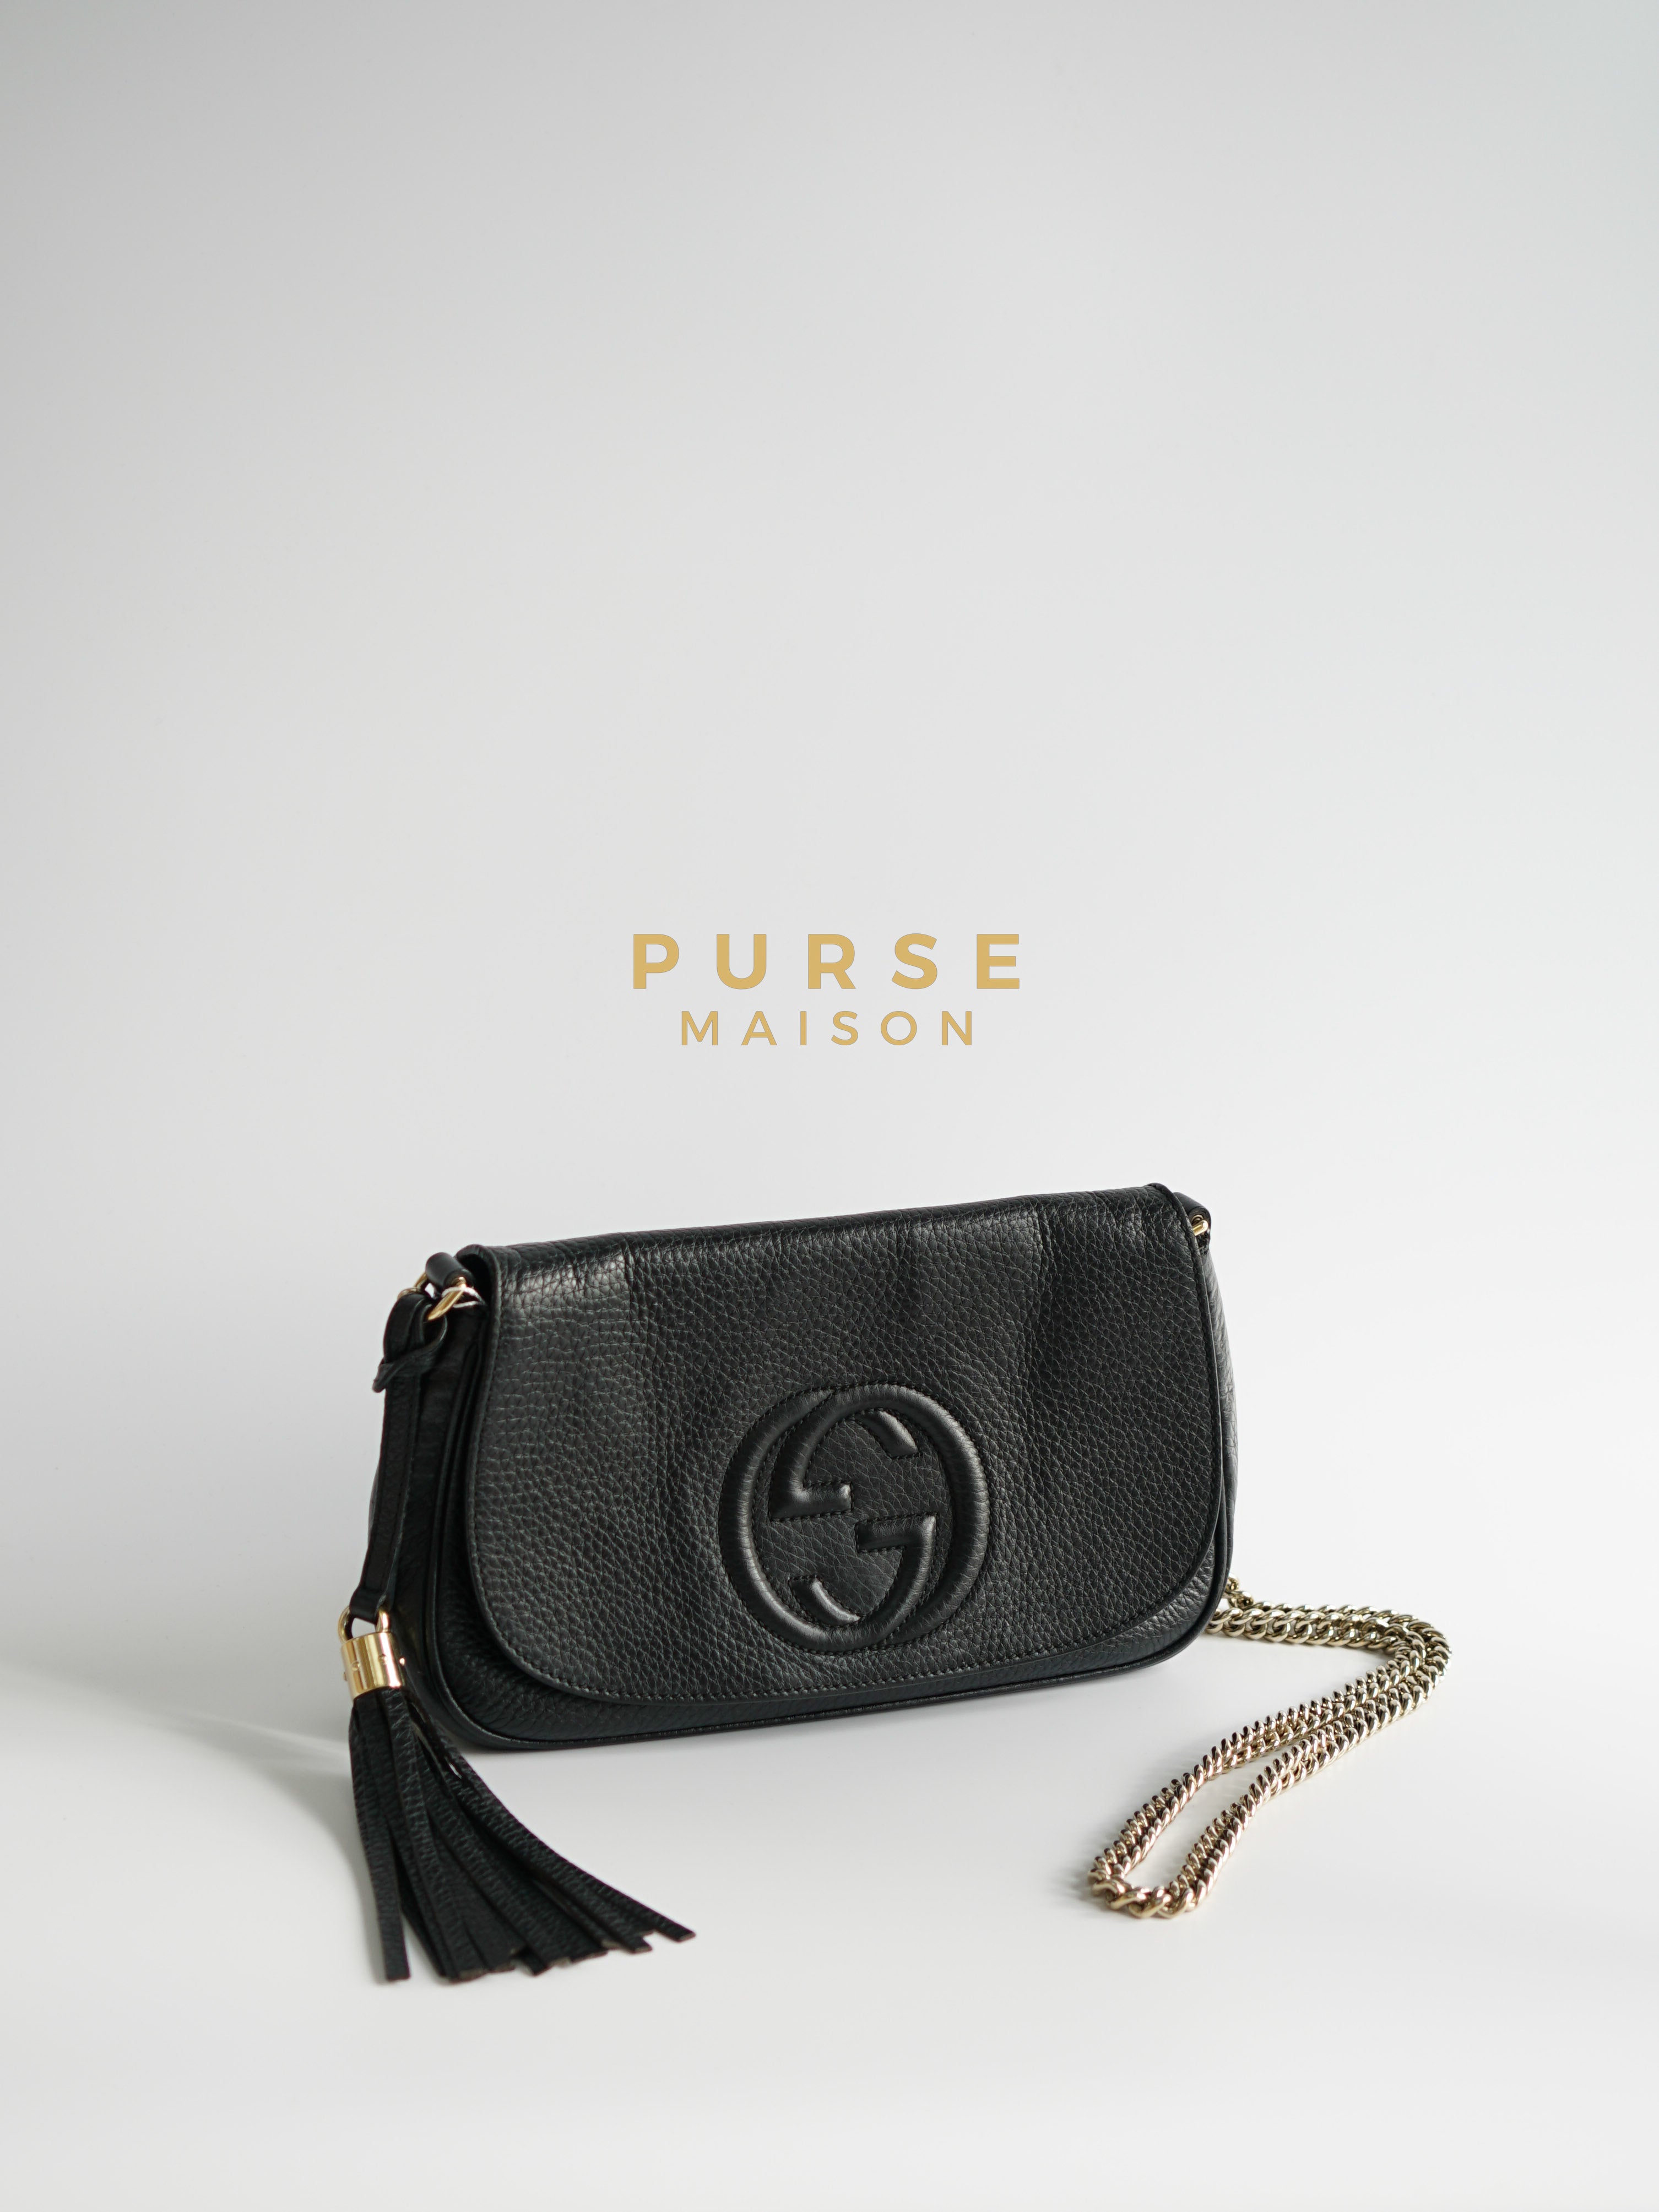 Soho Chain Flap Bag in Black Leather & Light Gold Hardware | Purse Maison Luxury Bags Shop